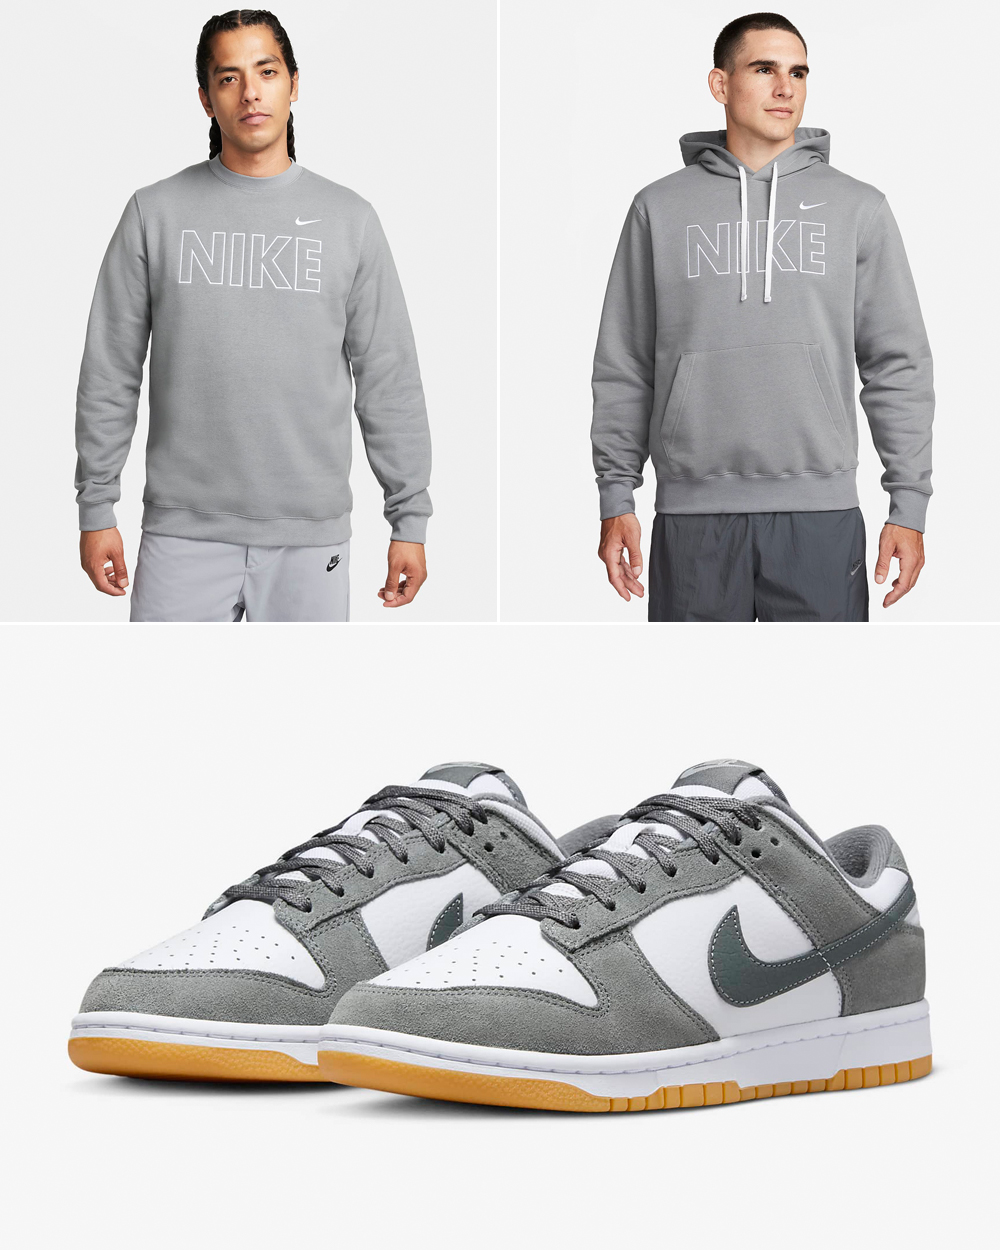 Nike-Dunk-Low-Smoke-Grey-Outfits